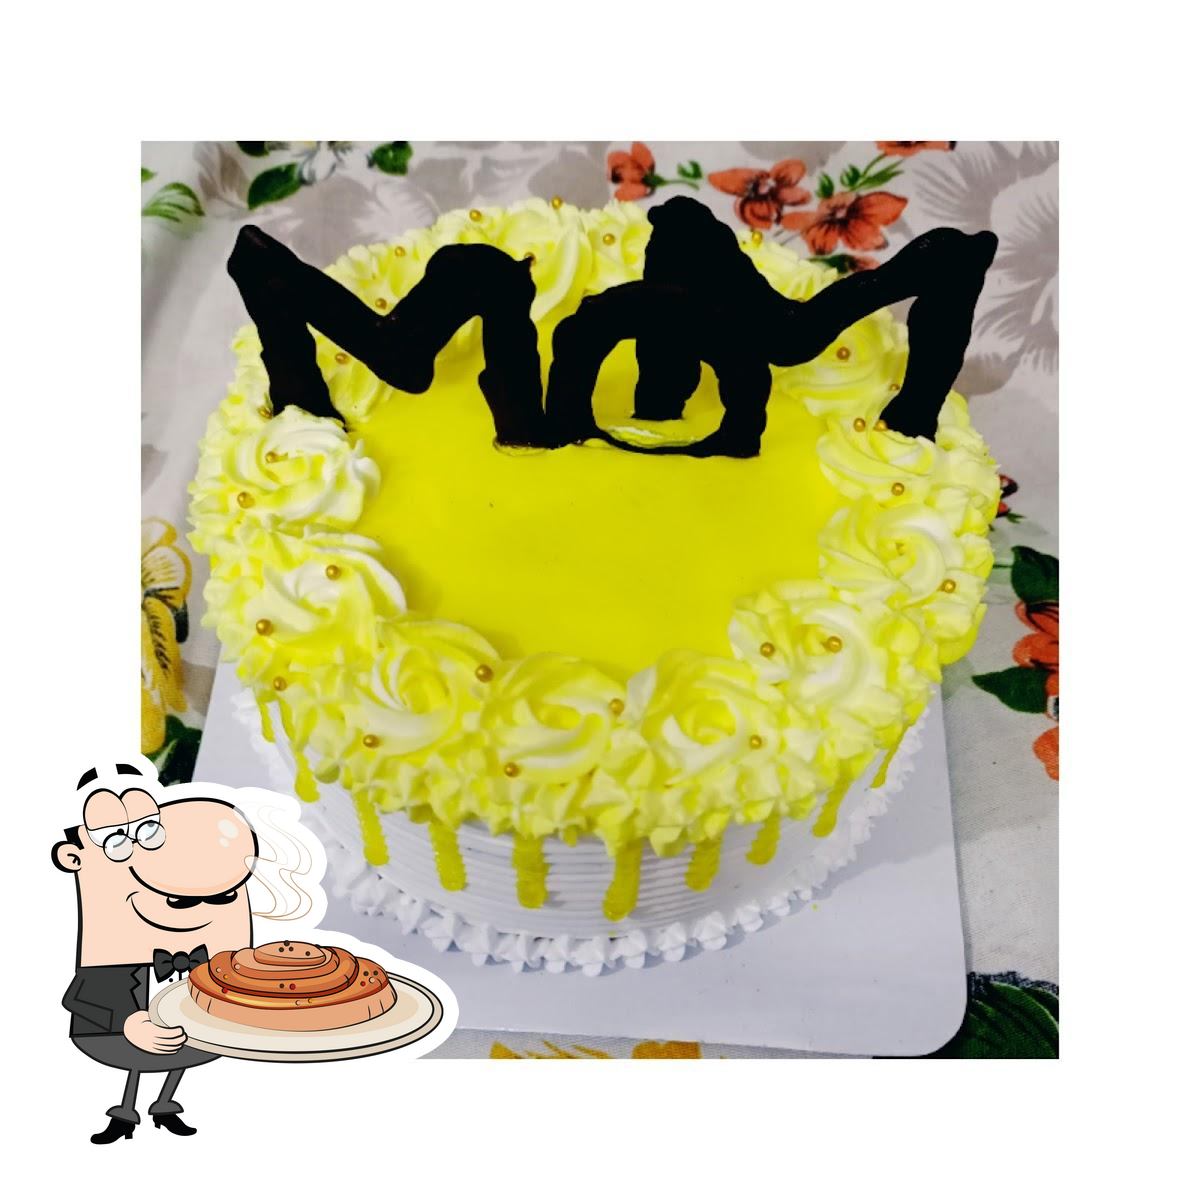 HAPPY BIRTHDAY MISS PRIYA thank you... - Fancy cake panadura | Facebook